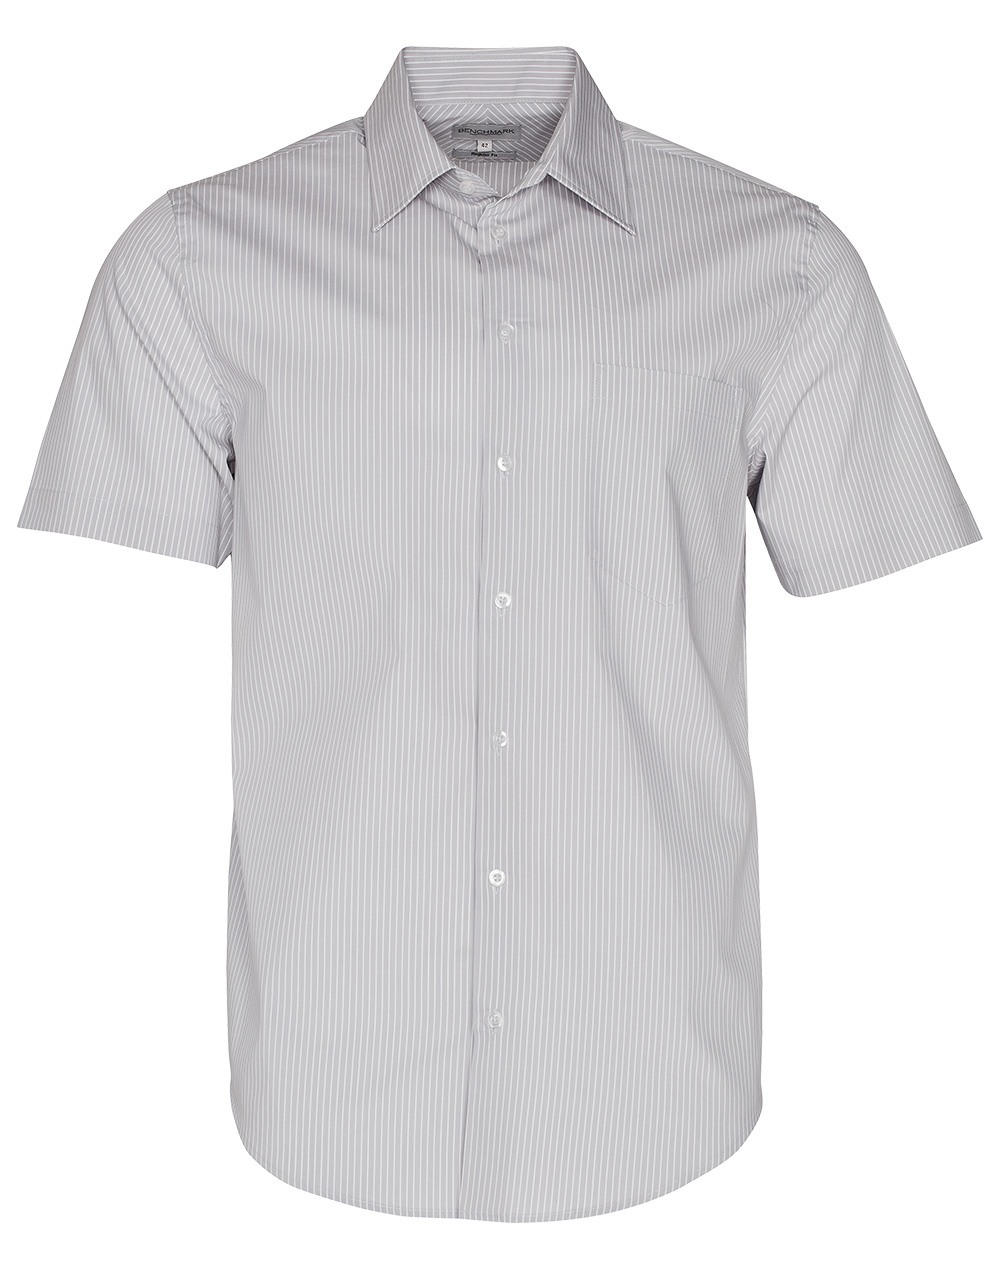 Benchmark M7200S Mens Ticking Stripe Short Sleeve Shirt | Fast Clothing